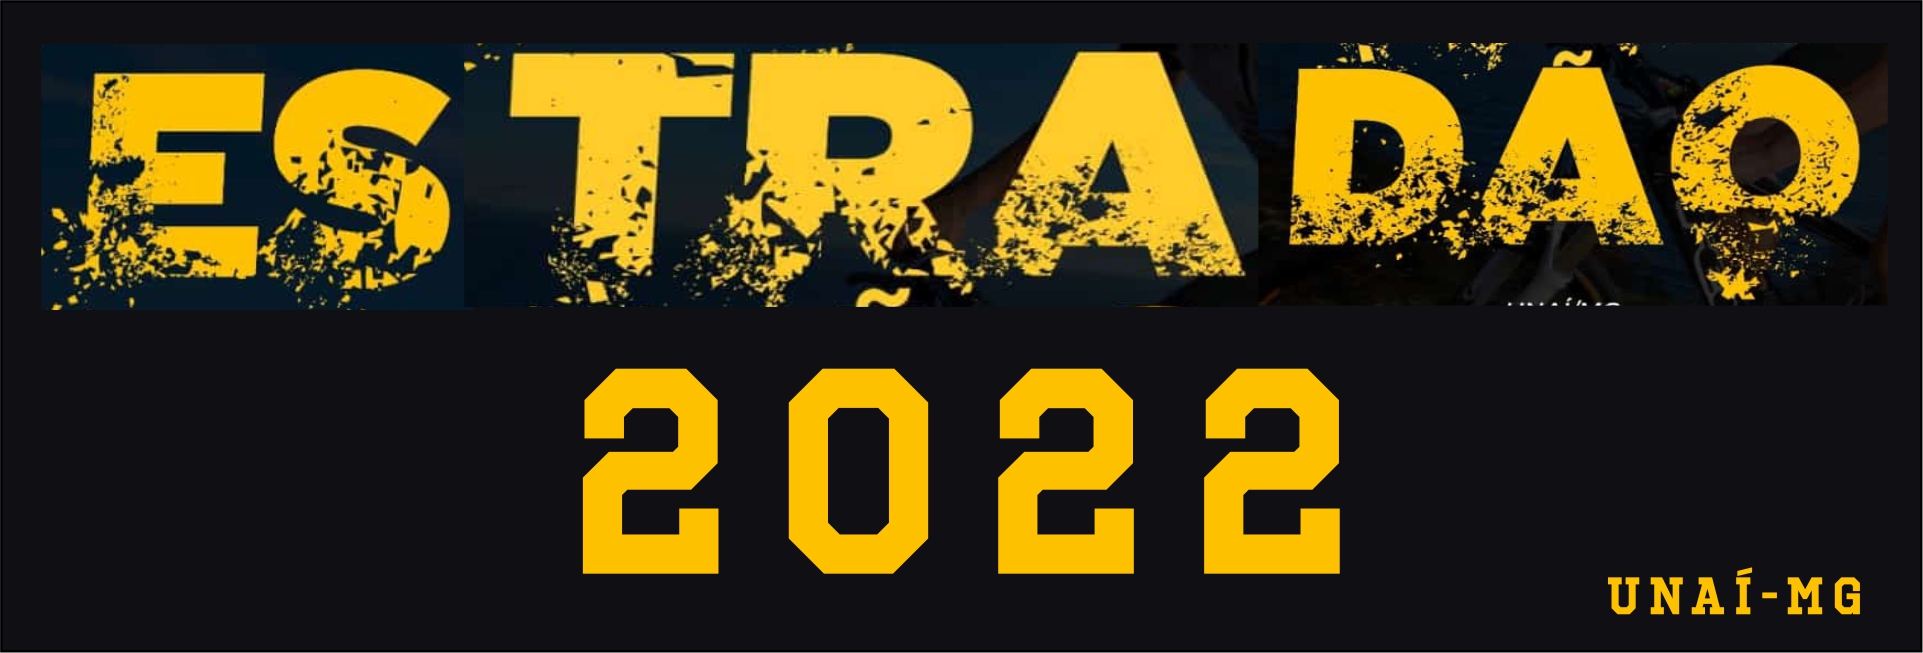 estrada-unai-2022-sistime